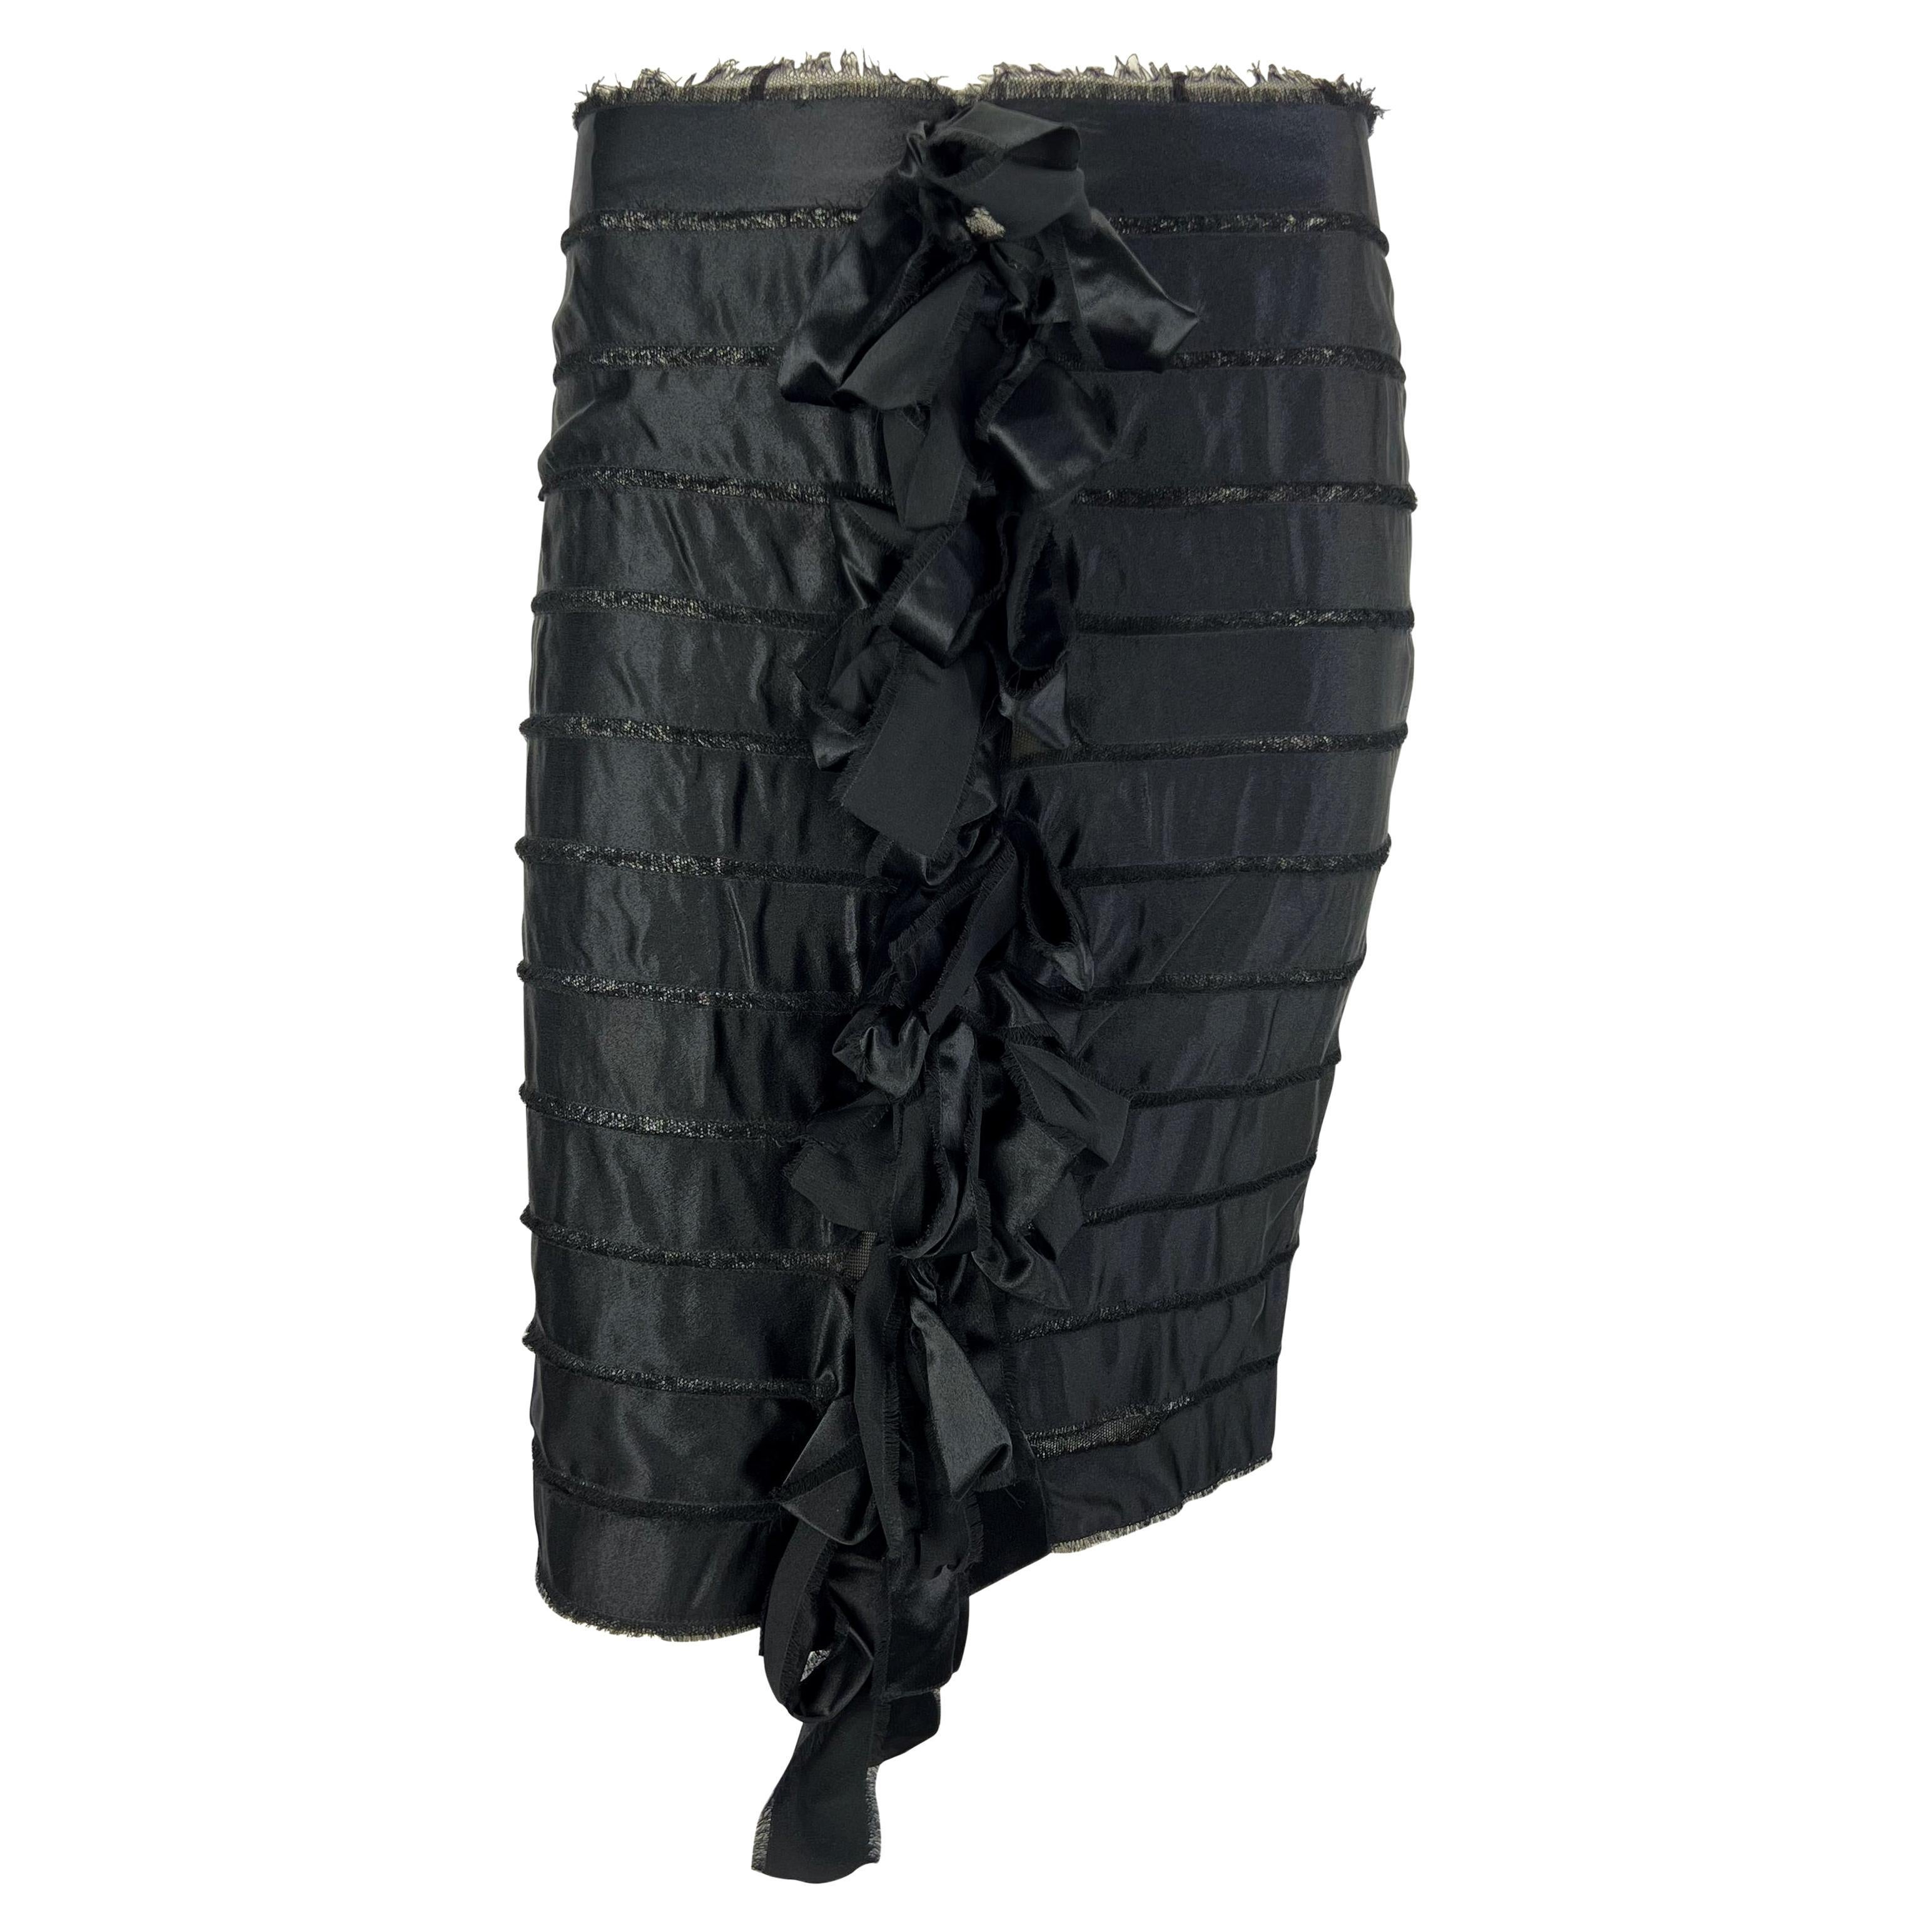 F/W 2002 Yves Saint Laurent by Tom Ford Runway Black Satin Ribbon Tulle Skirt For Sale